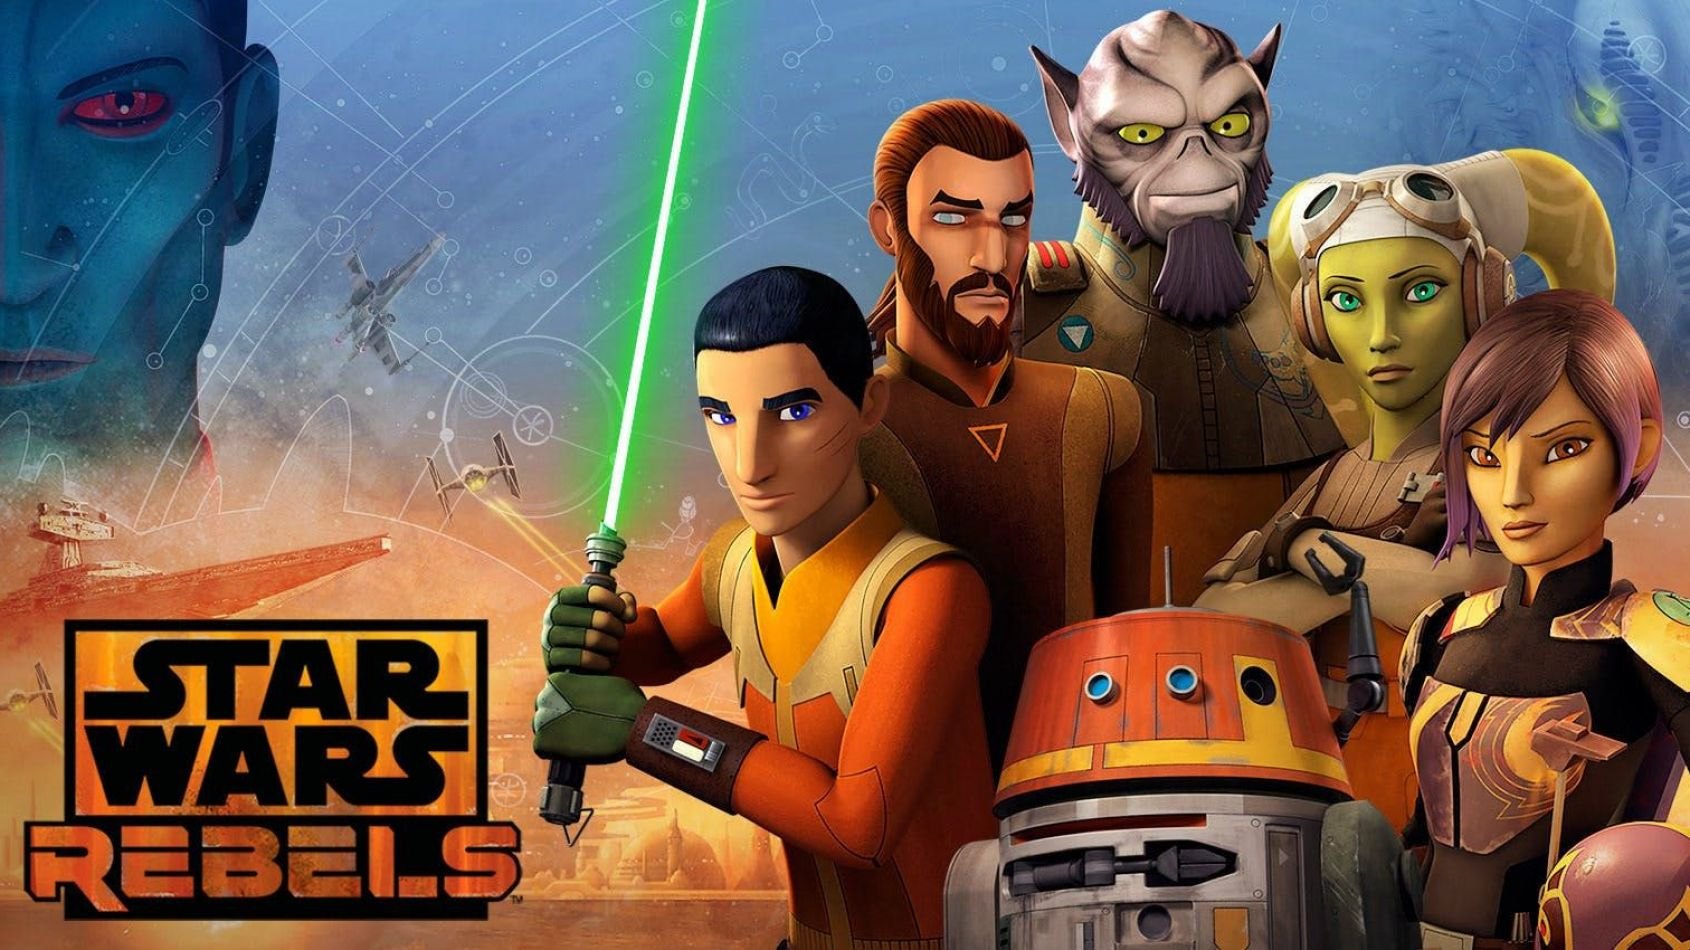 [Séries Animés] Star Wars The Rebels, Saison 4 68255-star-wars-rebels-season-4-banner-169-lg